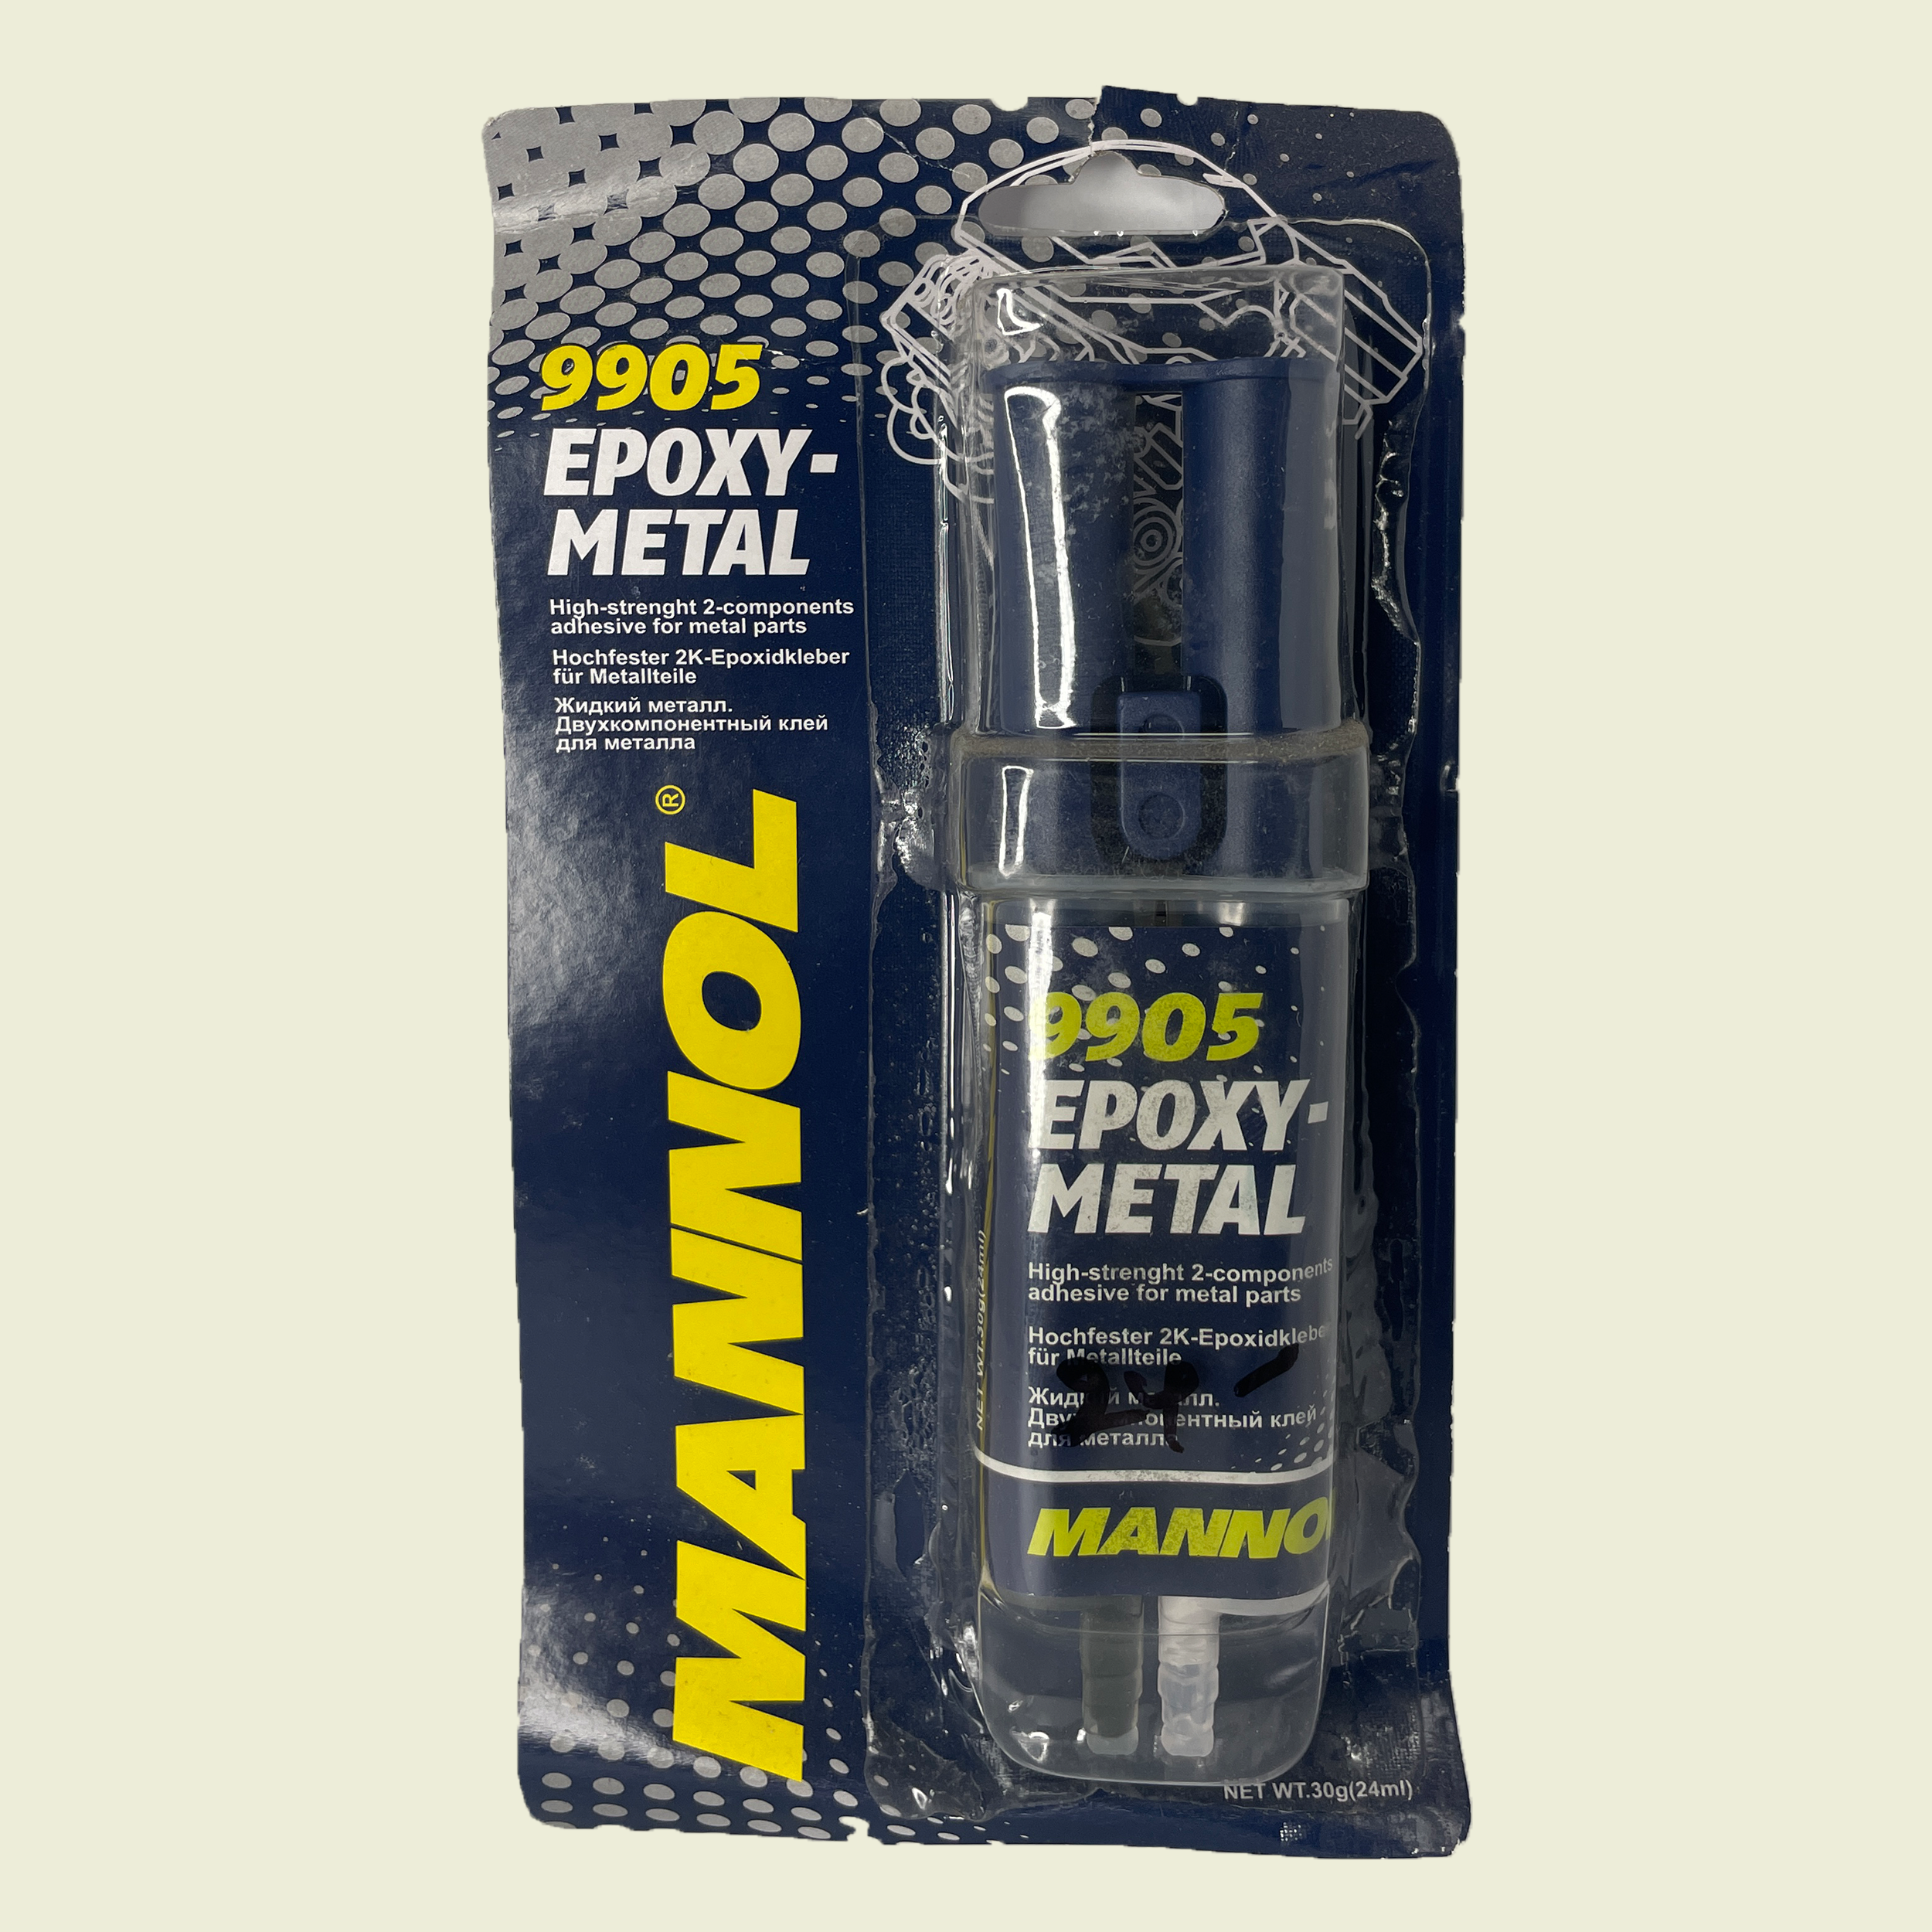 3 x Mannol 9905 Epoxy Metal Glue Adhesive For Metal, Auto Parts